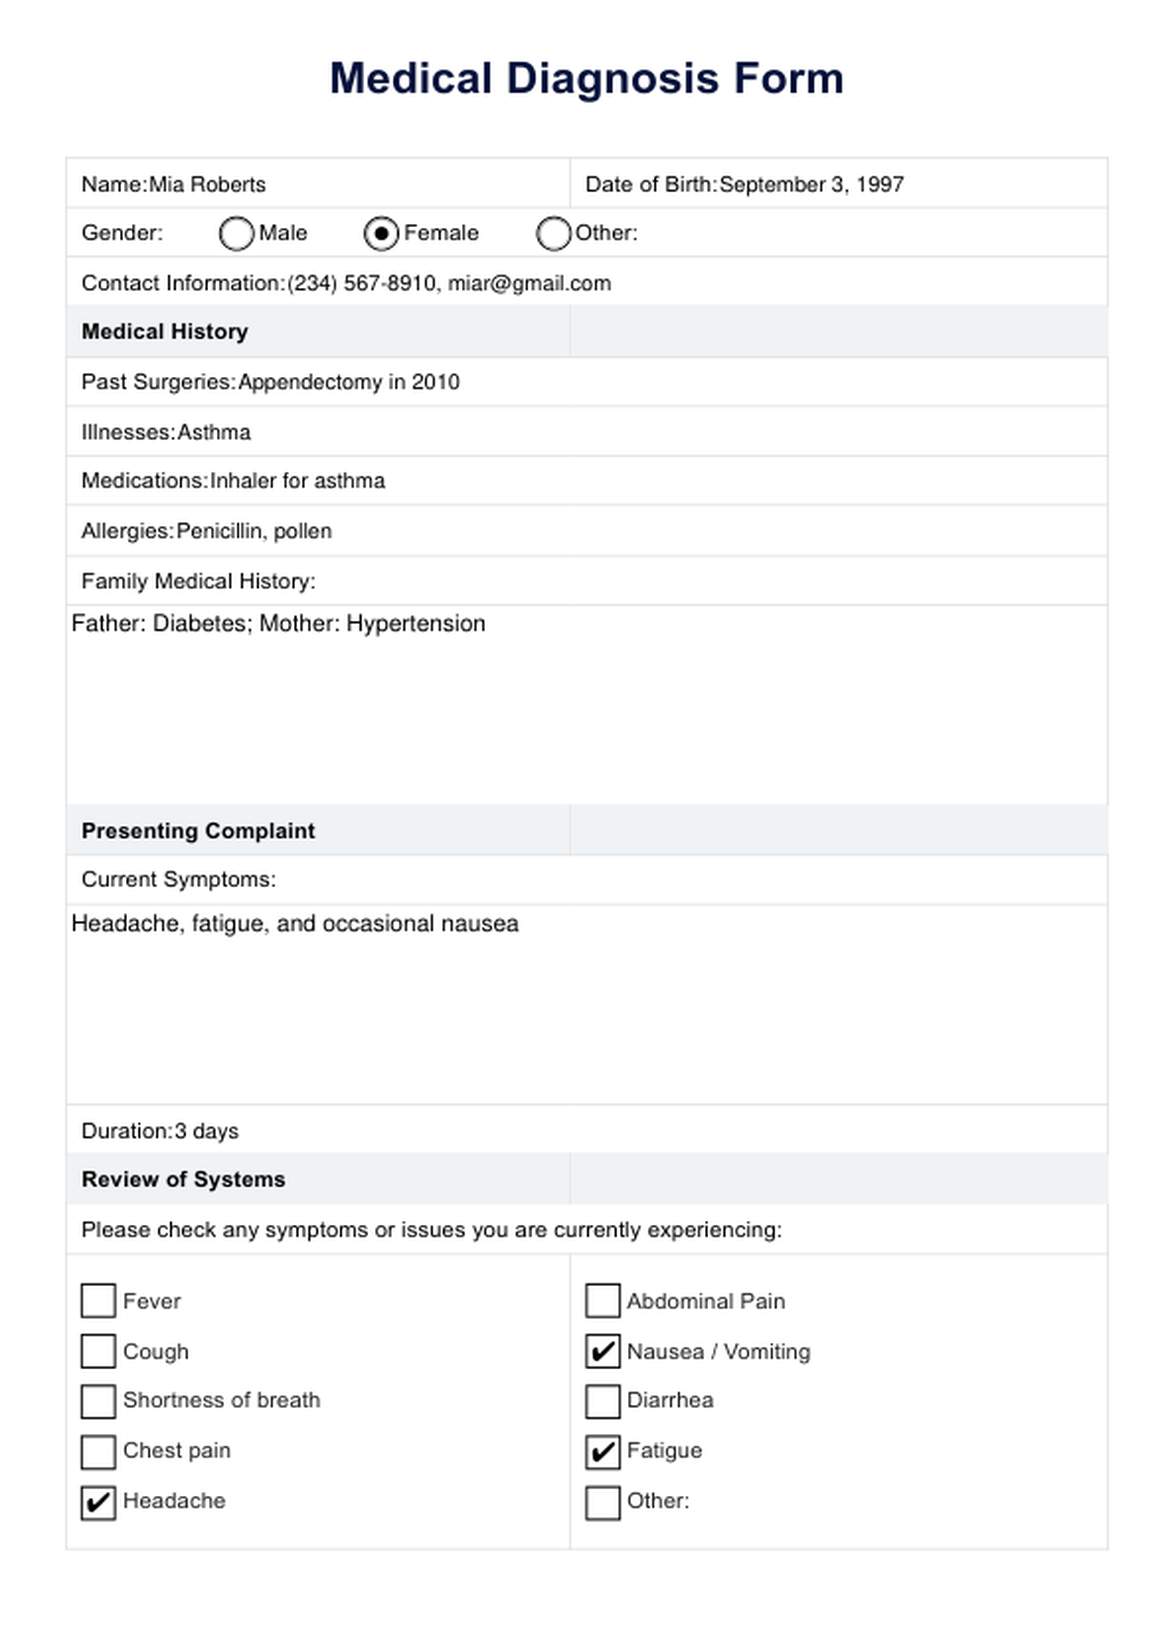 Medical Diagnosis Form PDF Example